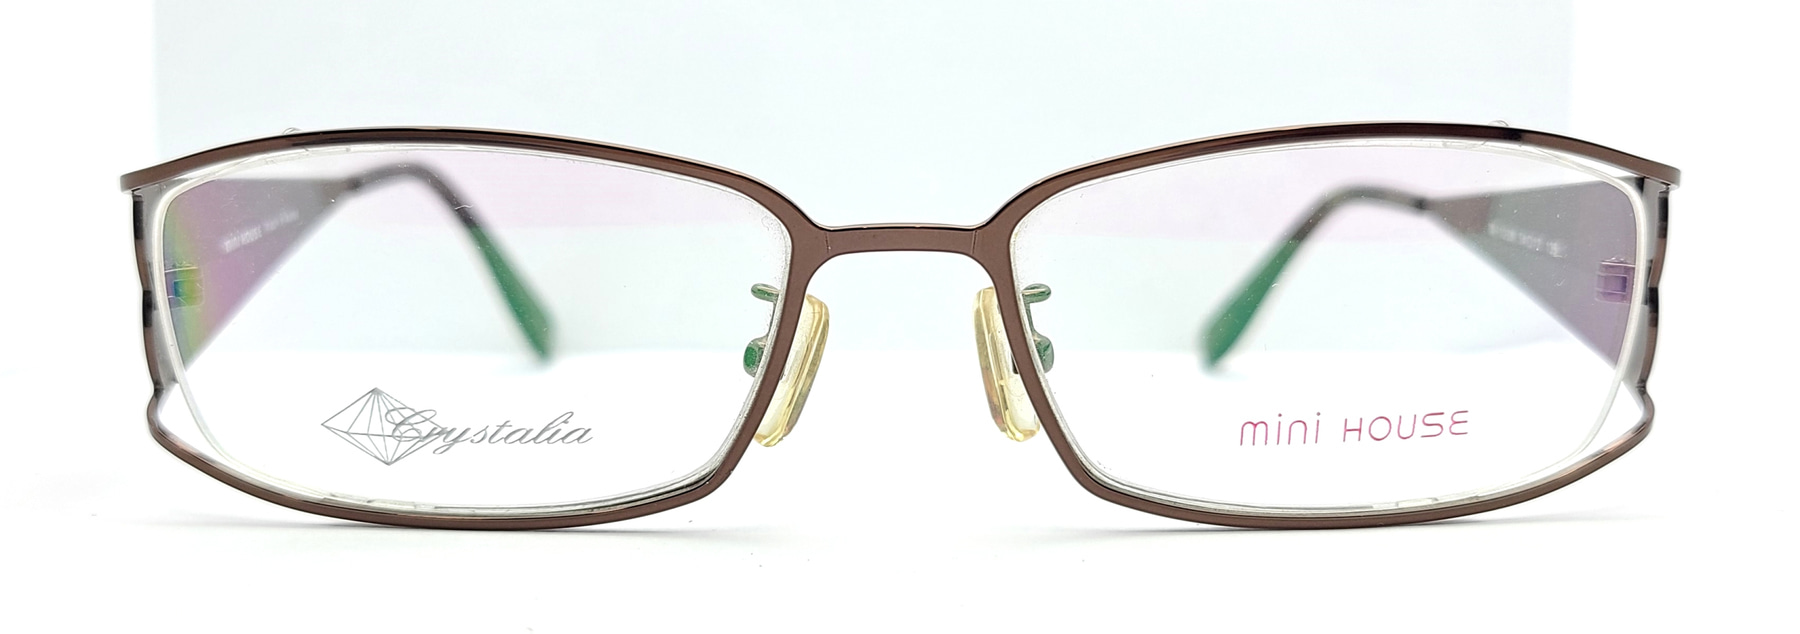 MINIHOUSE M-1038, Korean glasses, sunglasses, eyeglasses, glasses